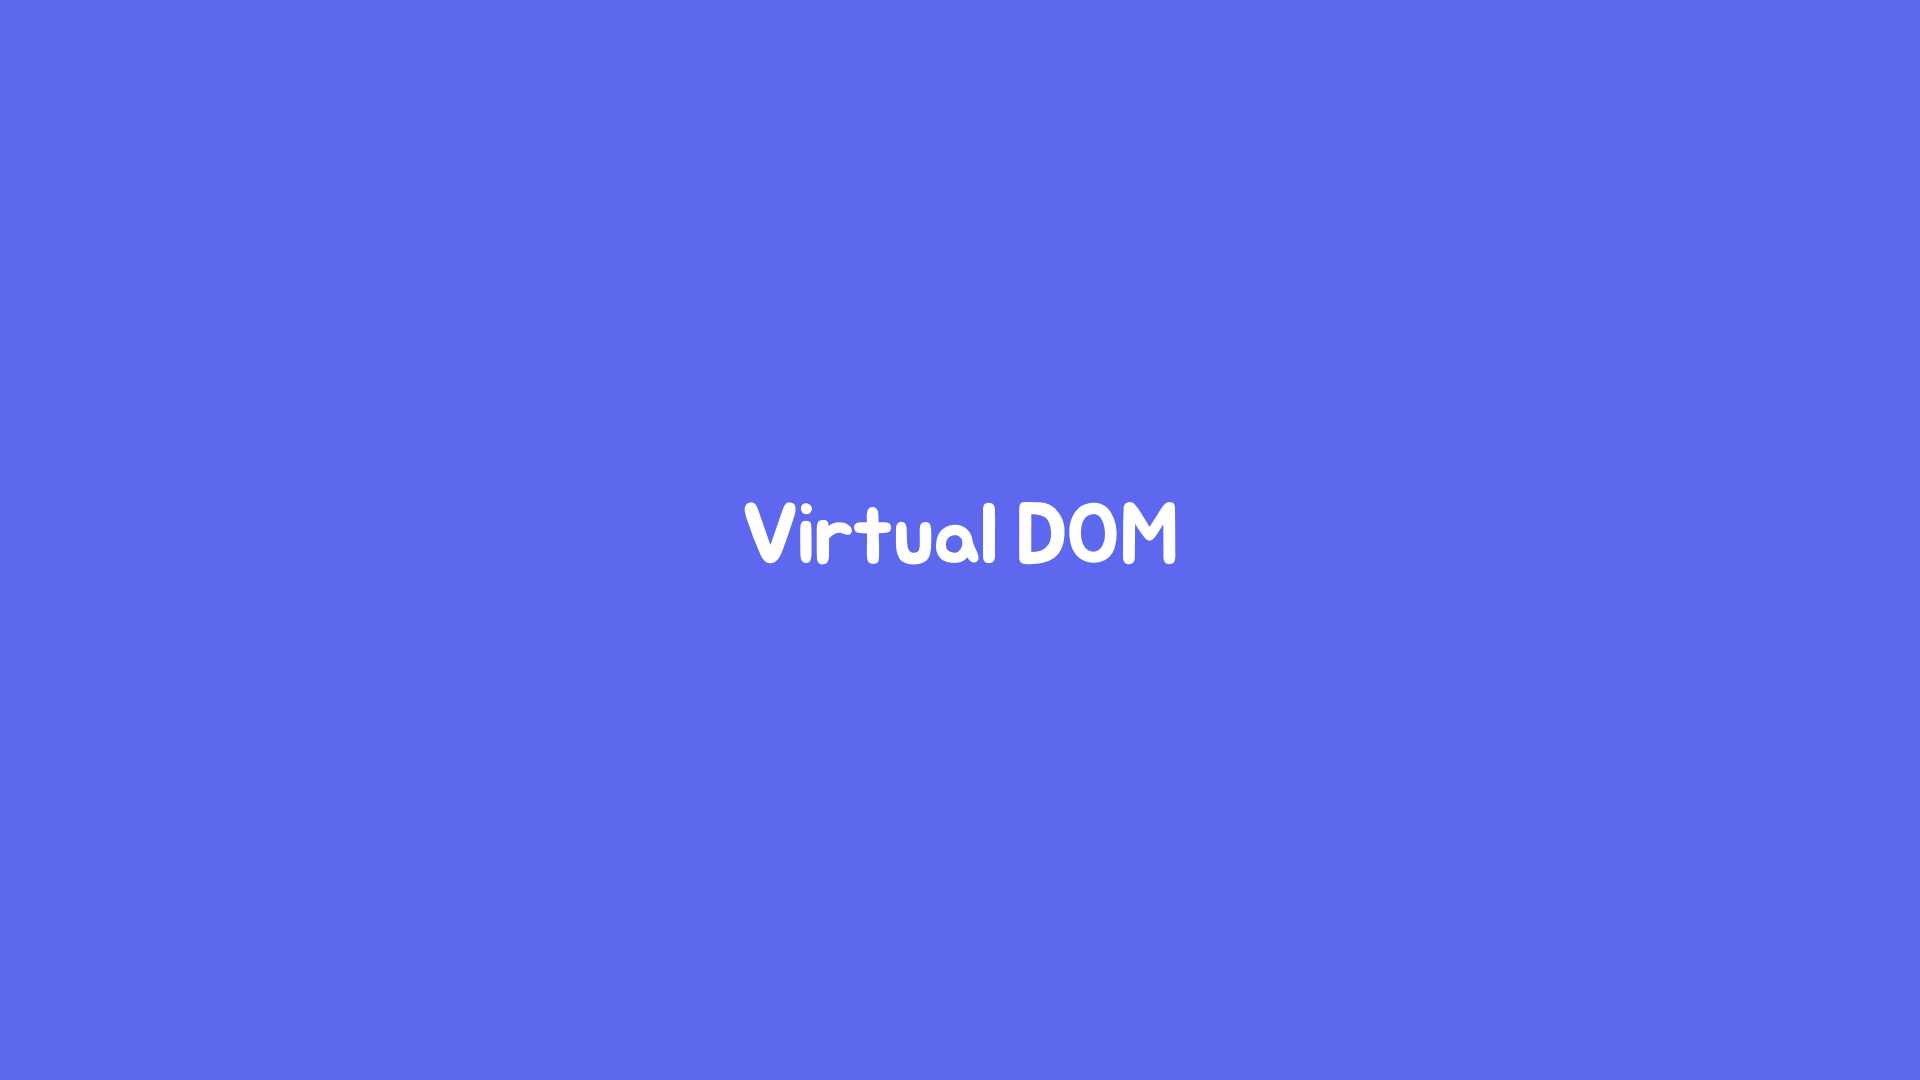 Virtual DOM 게시글 히어로 이미지